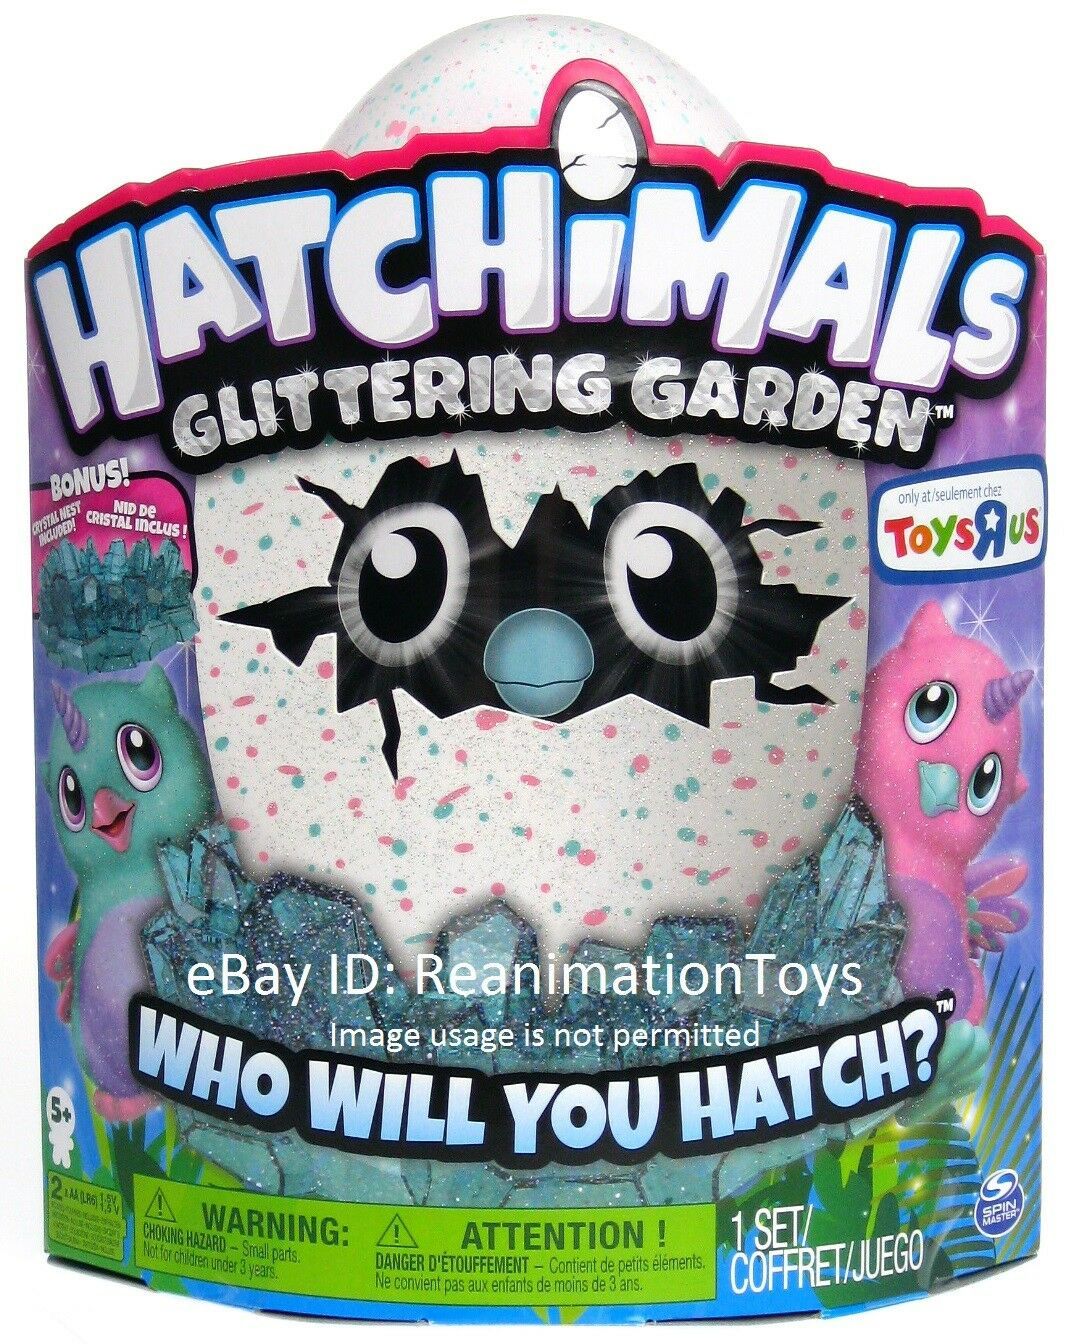 hatchimal glittering garden owlicorn